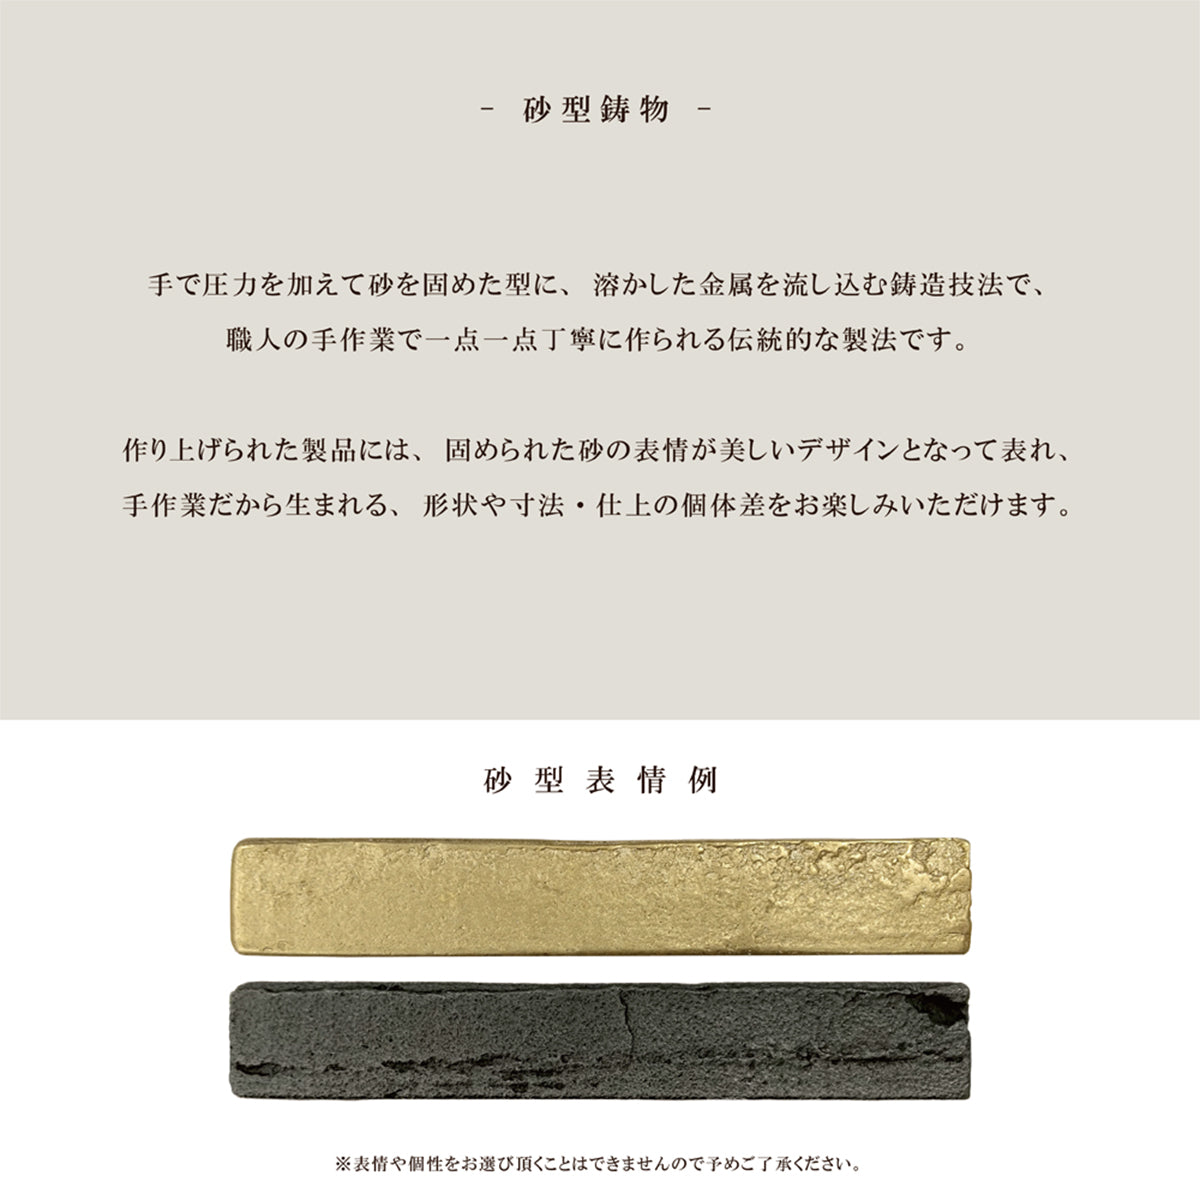 Brass Casting 真鍮鋳物 アンティーク タオル掛け (L型 真鍮色 BT-201)